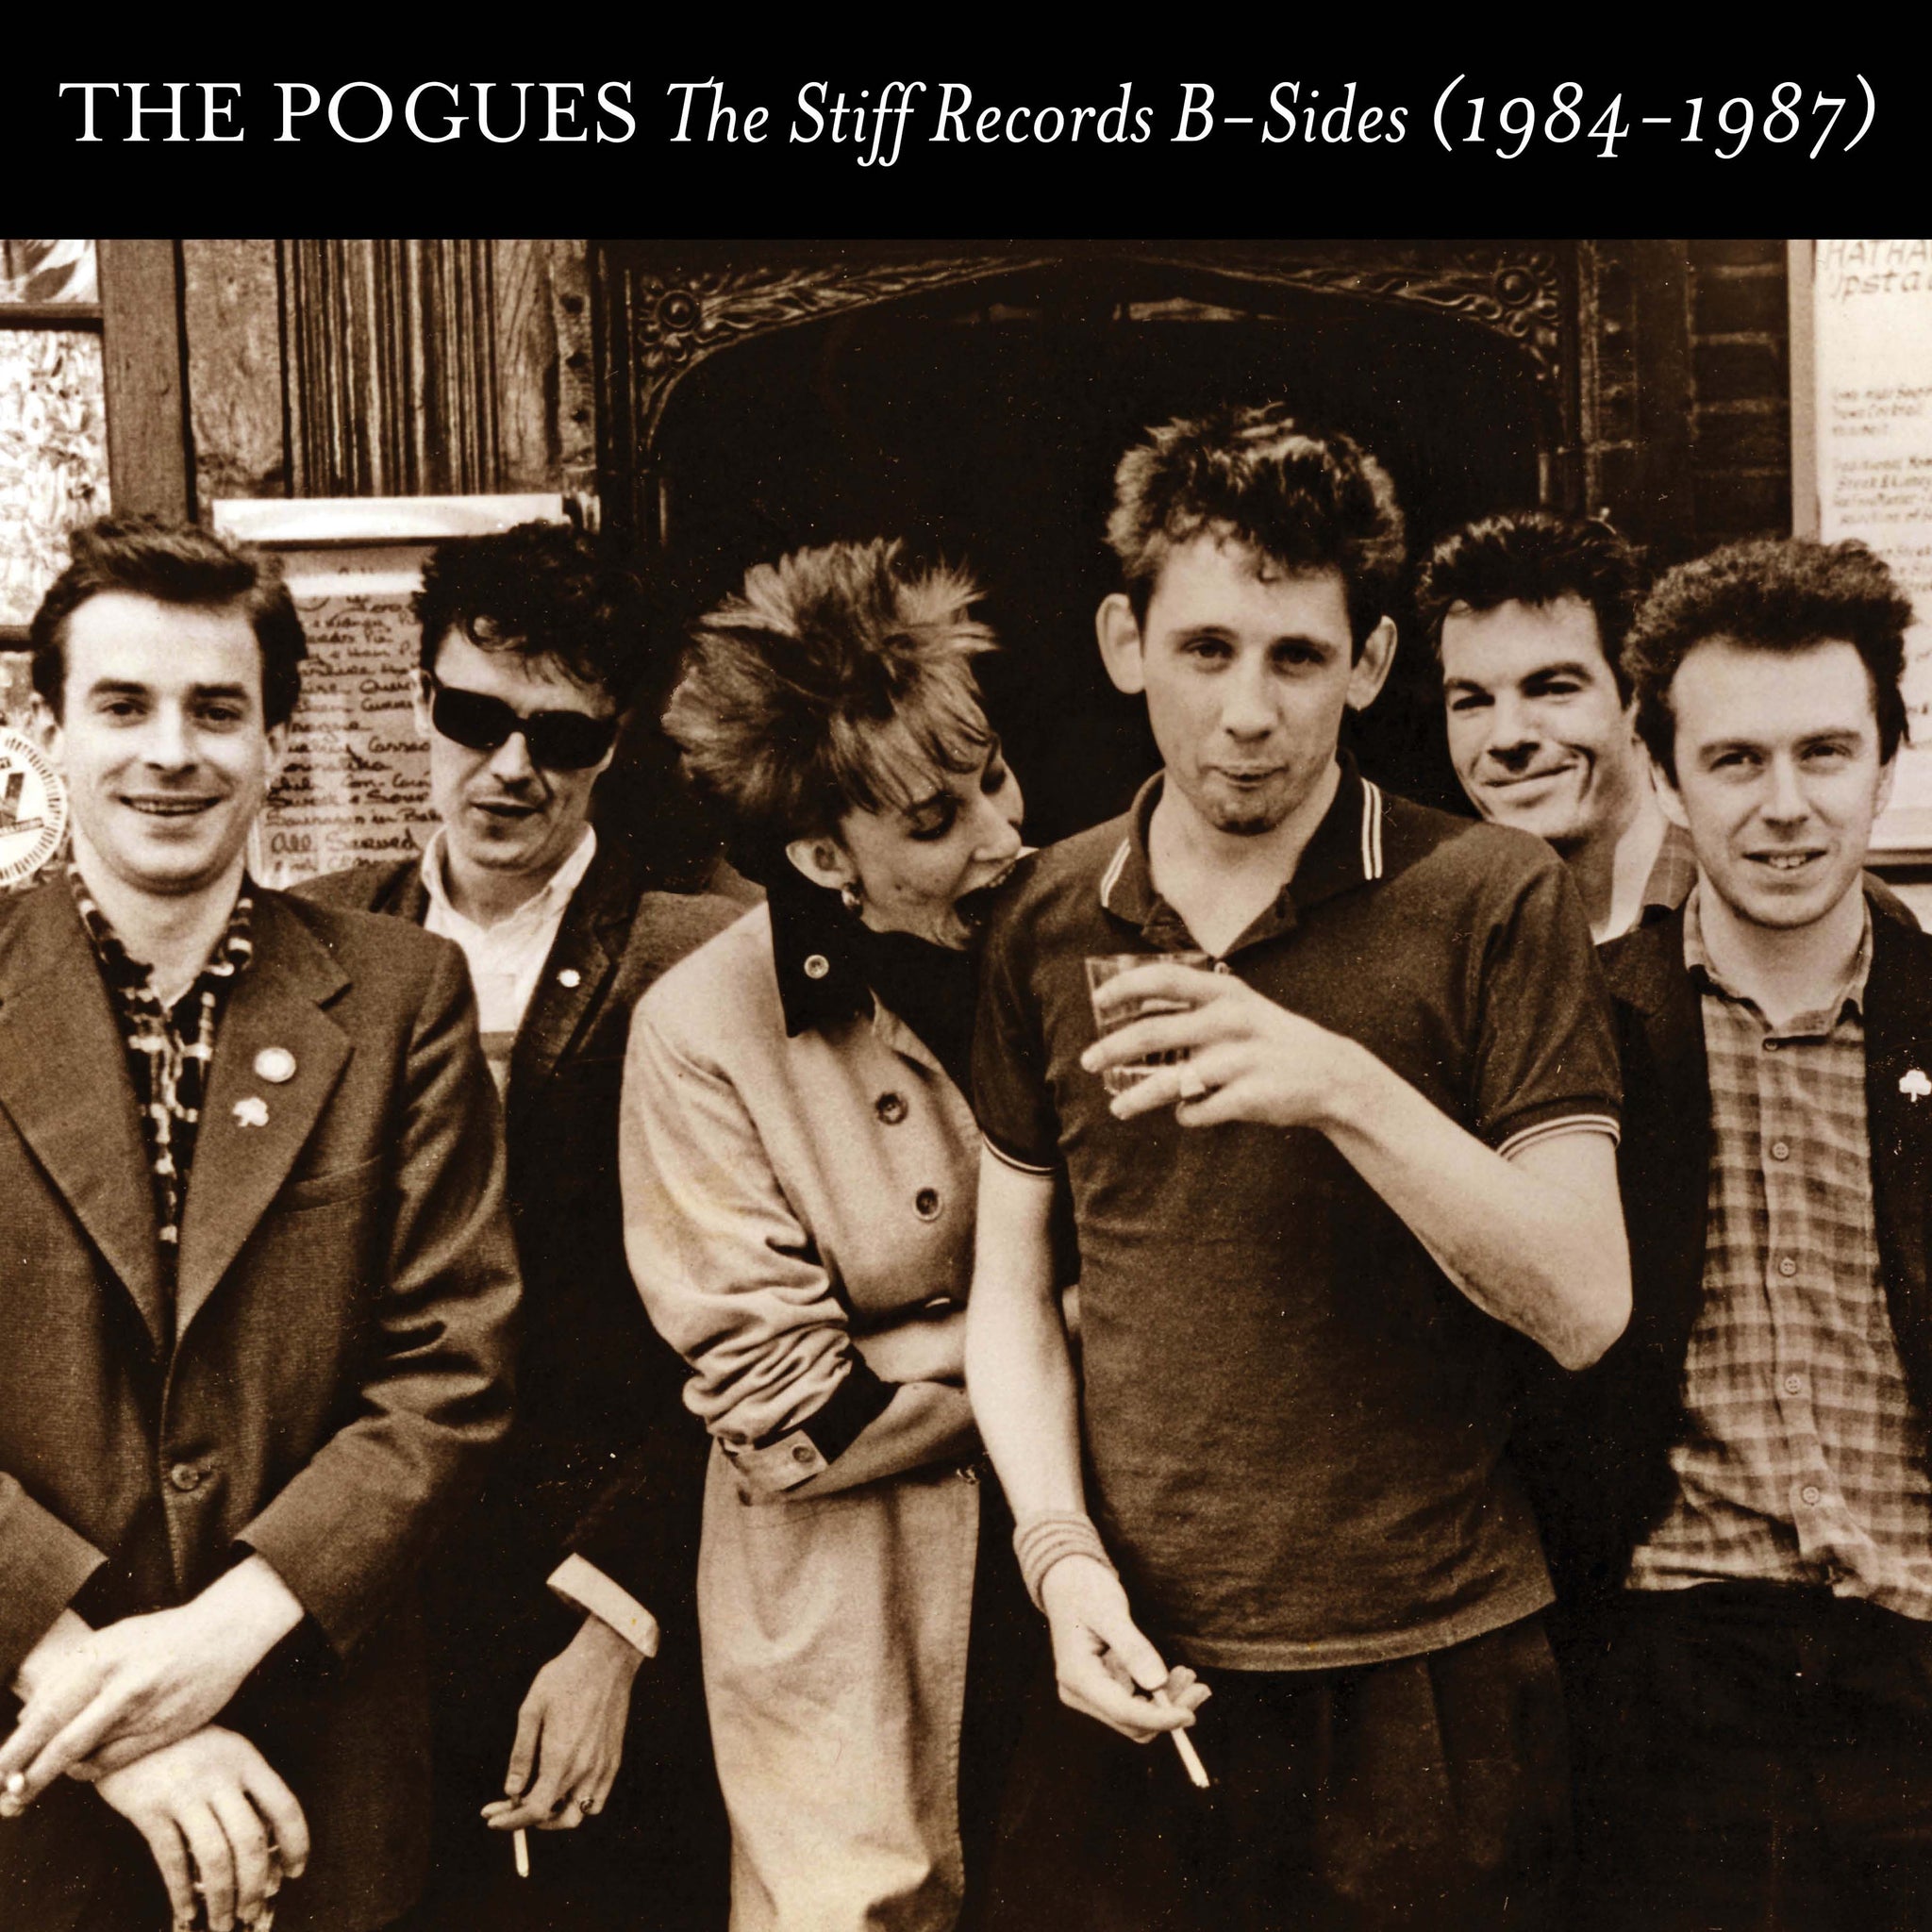 THE POGUES - The Stiff Records B-Sides 1984-1987 - 2LP - Black/Green Vinyl [RSD23]